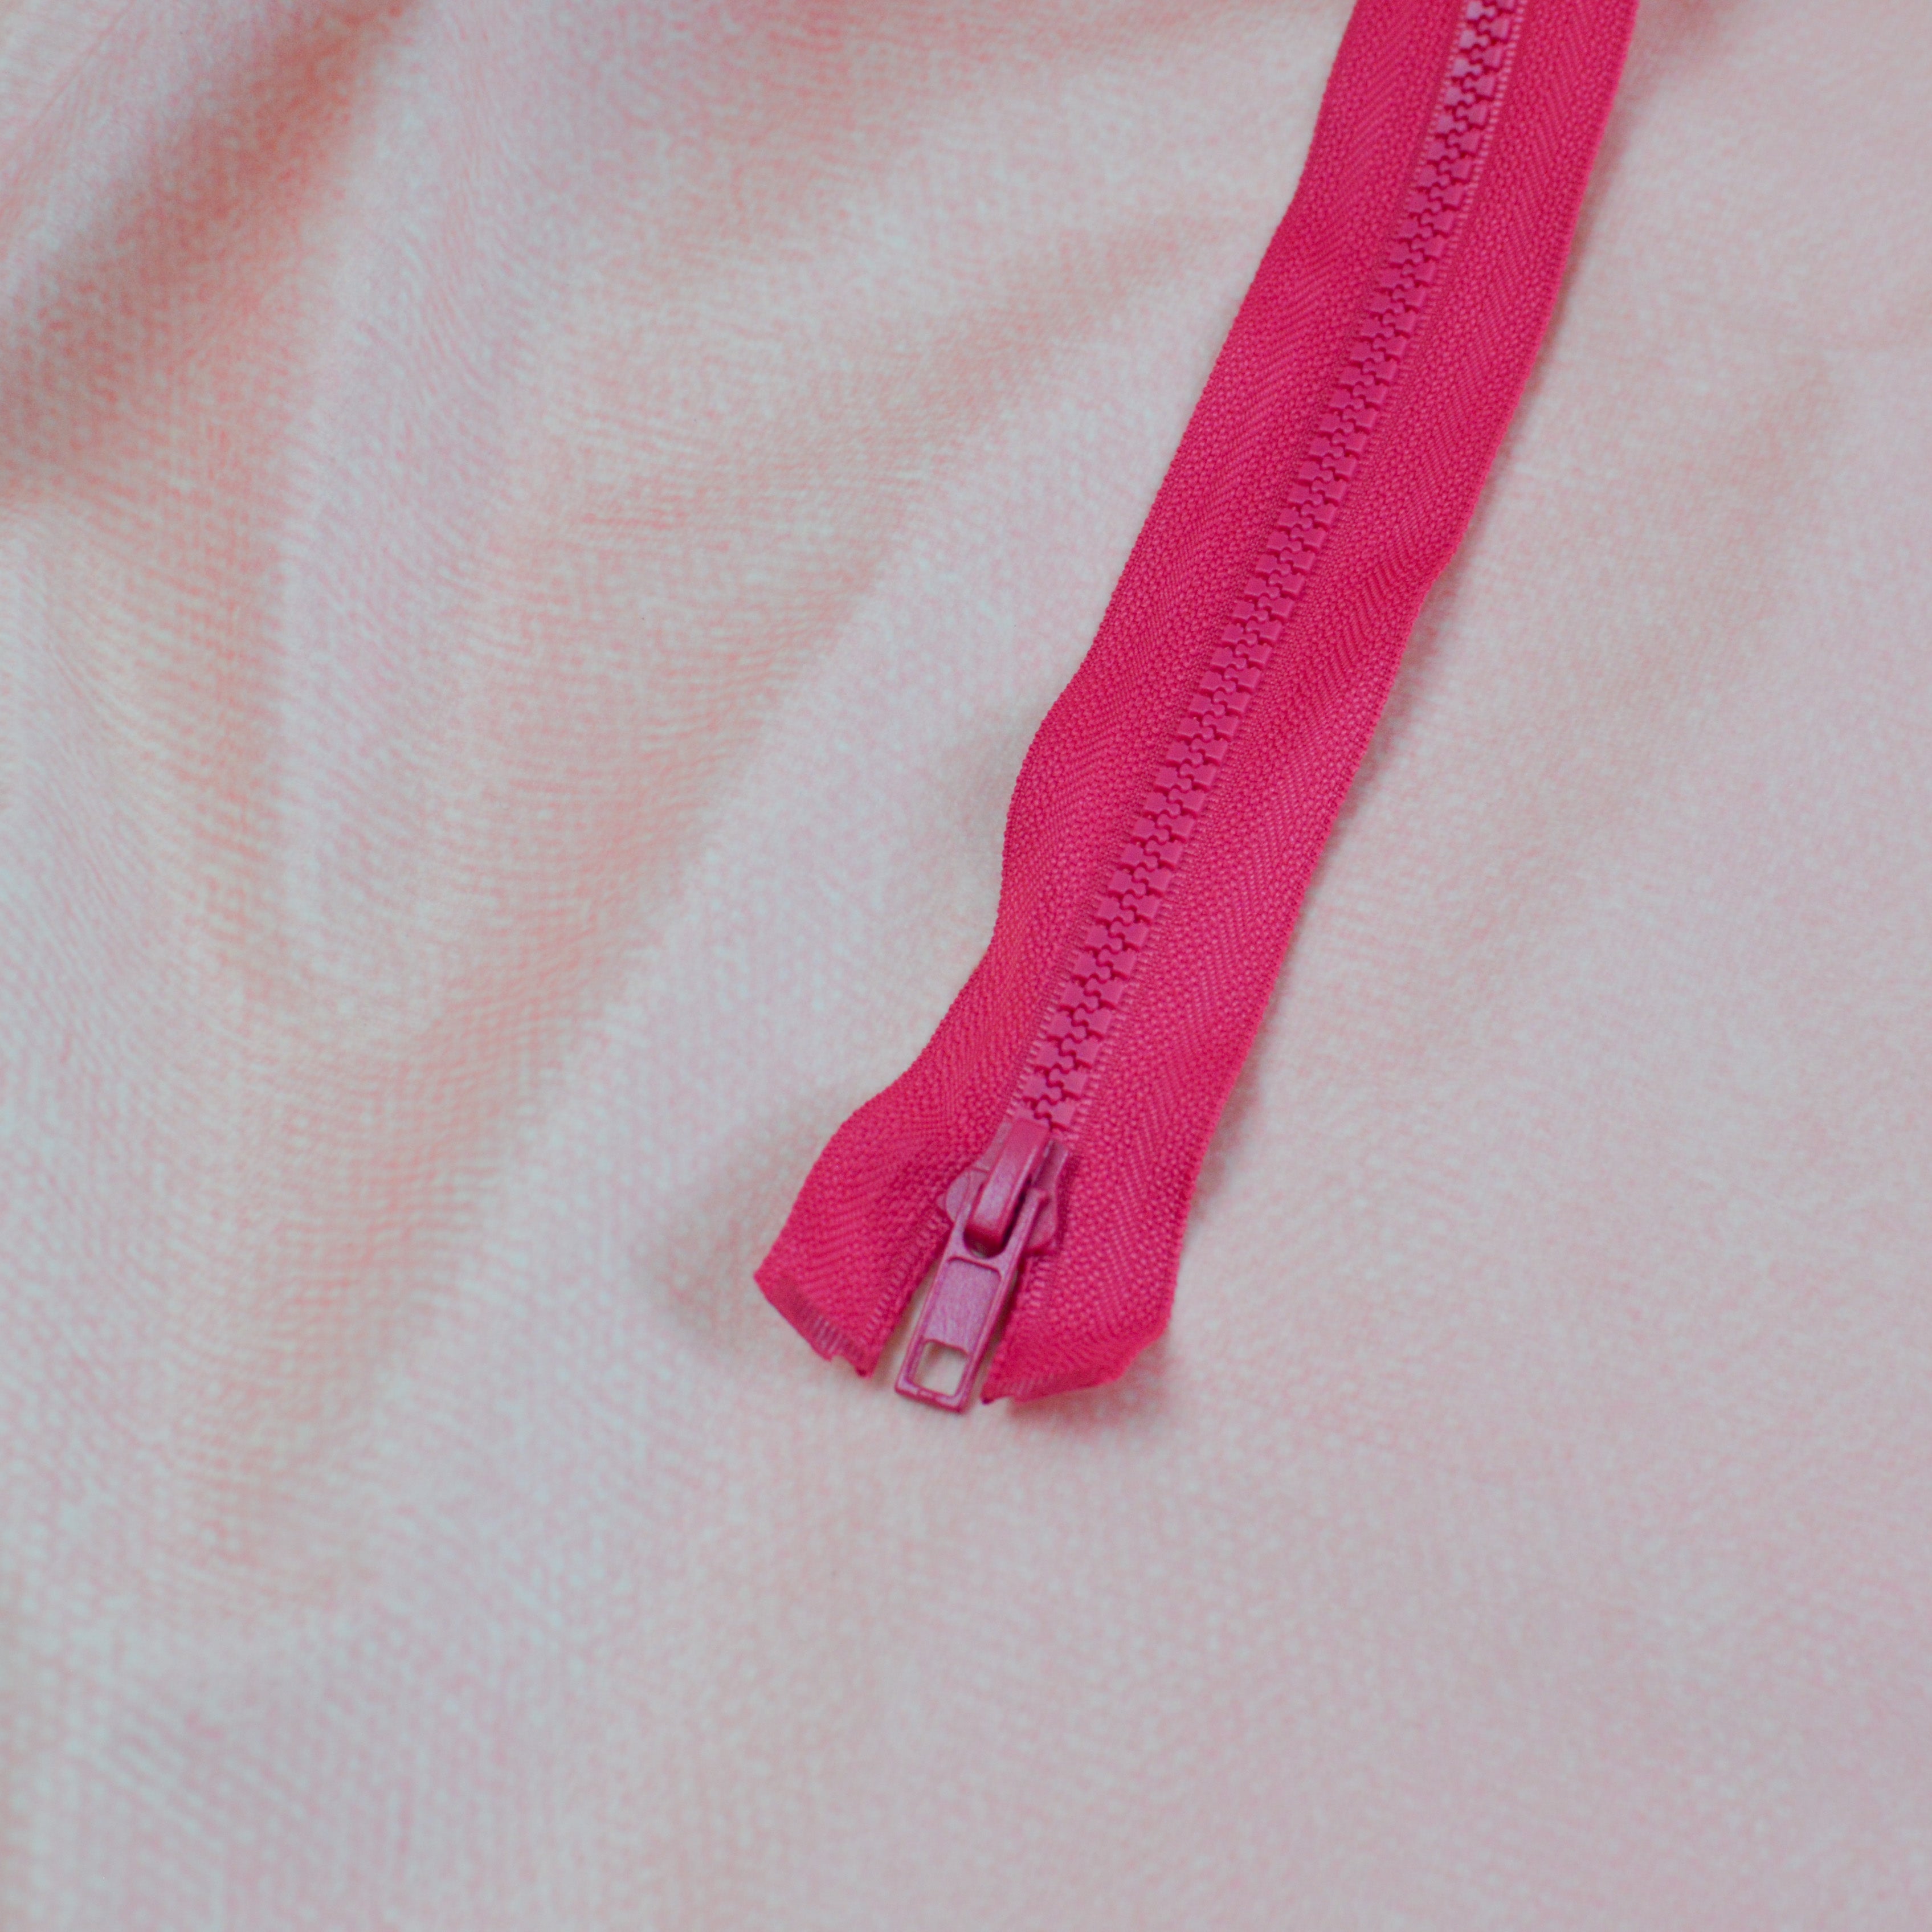 Jacken Reißverschluss 65 cm himbeer pink Stück poshpinks